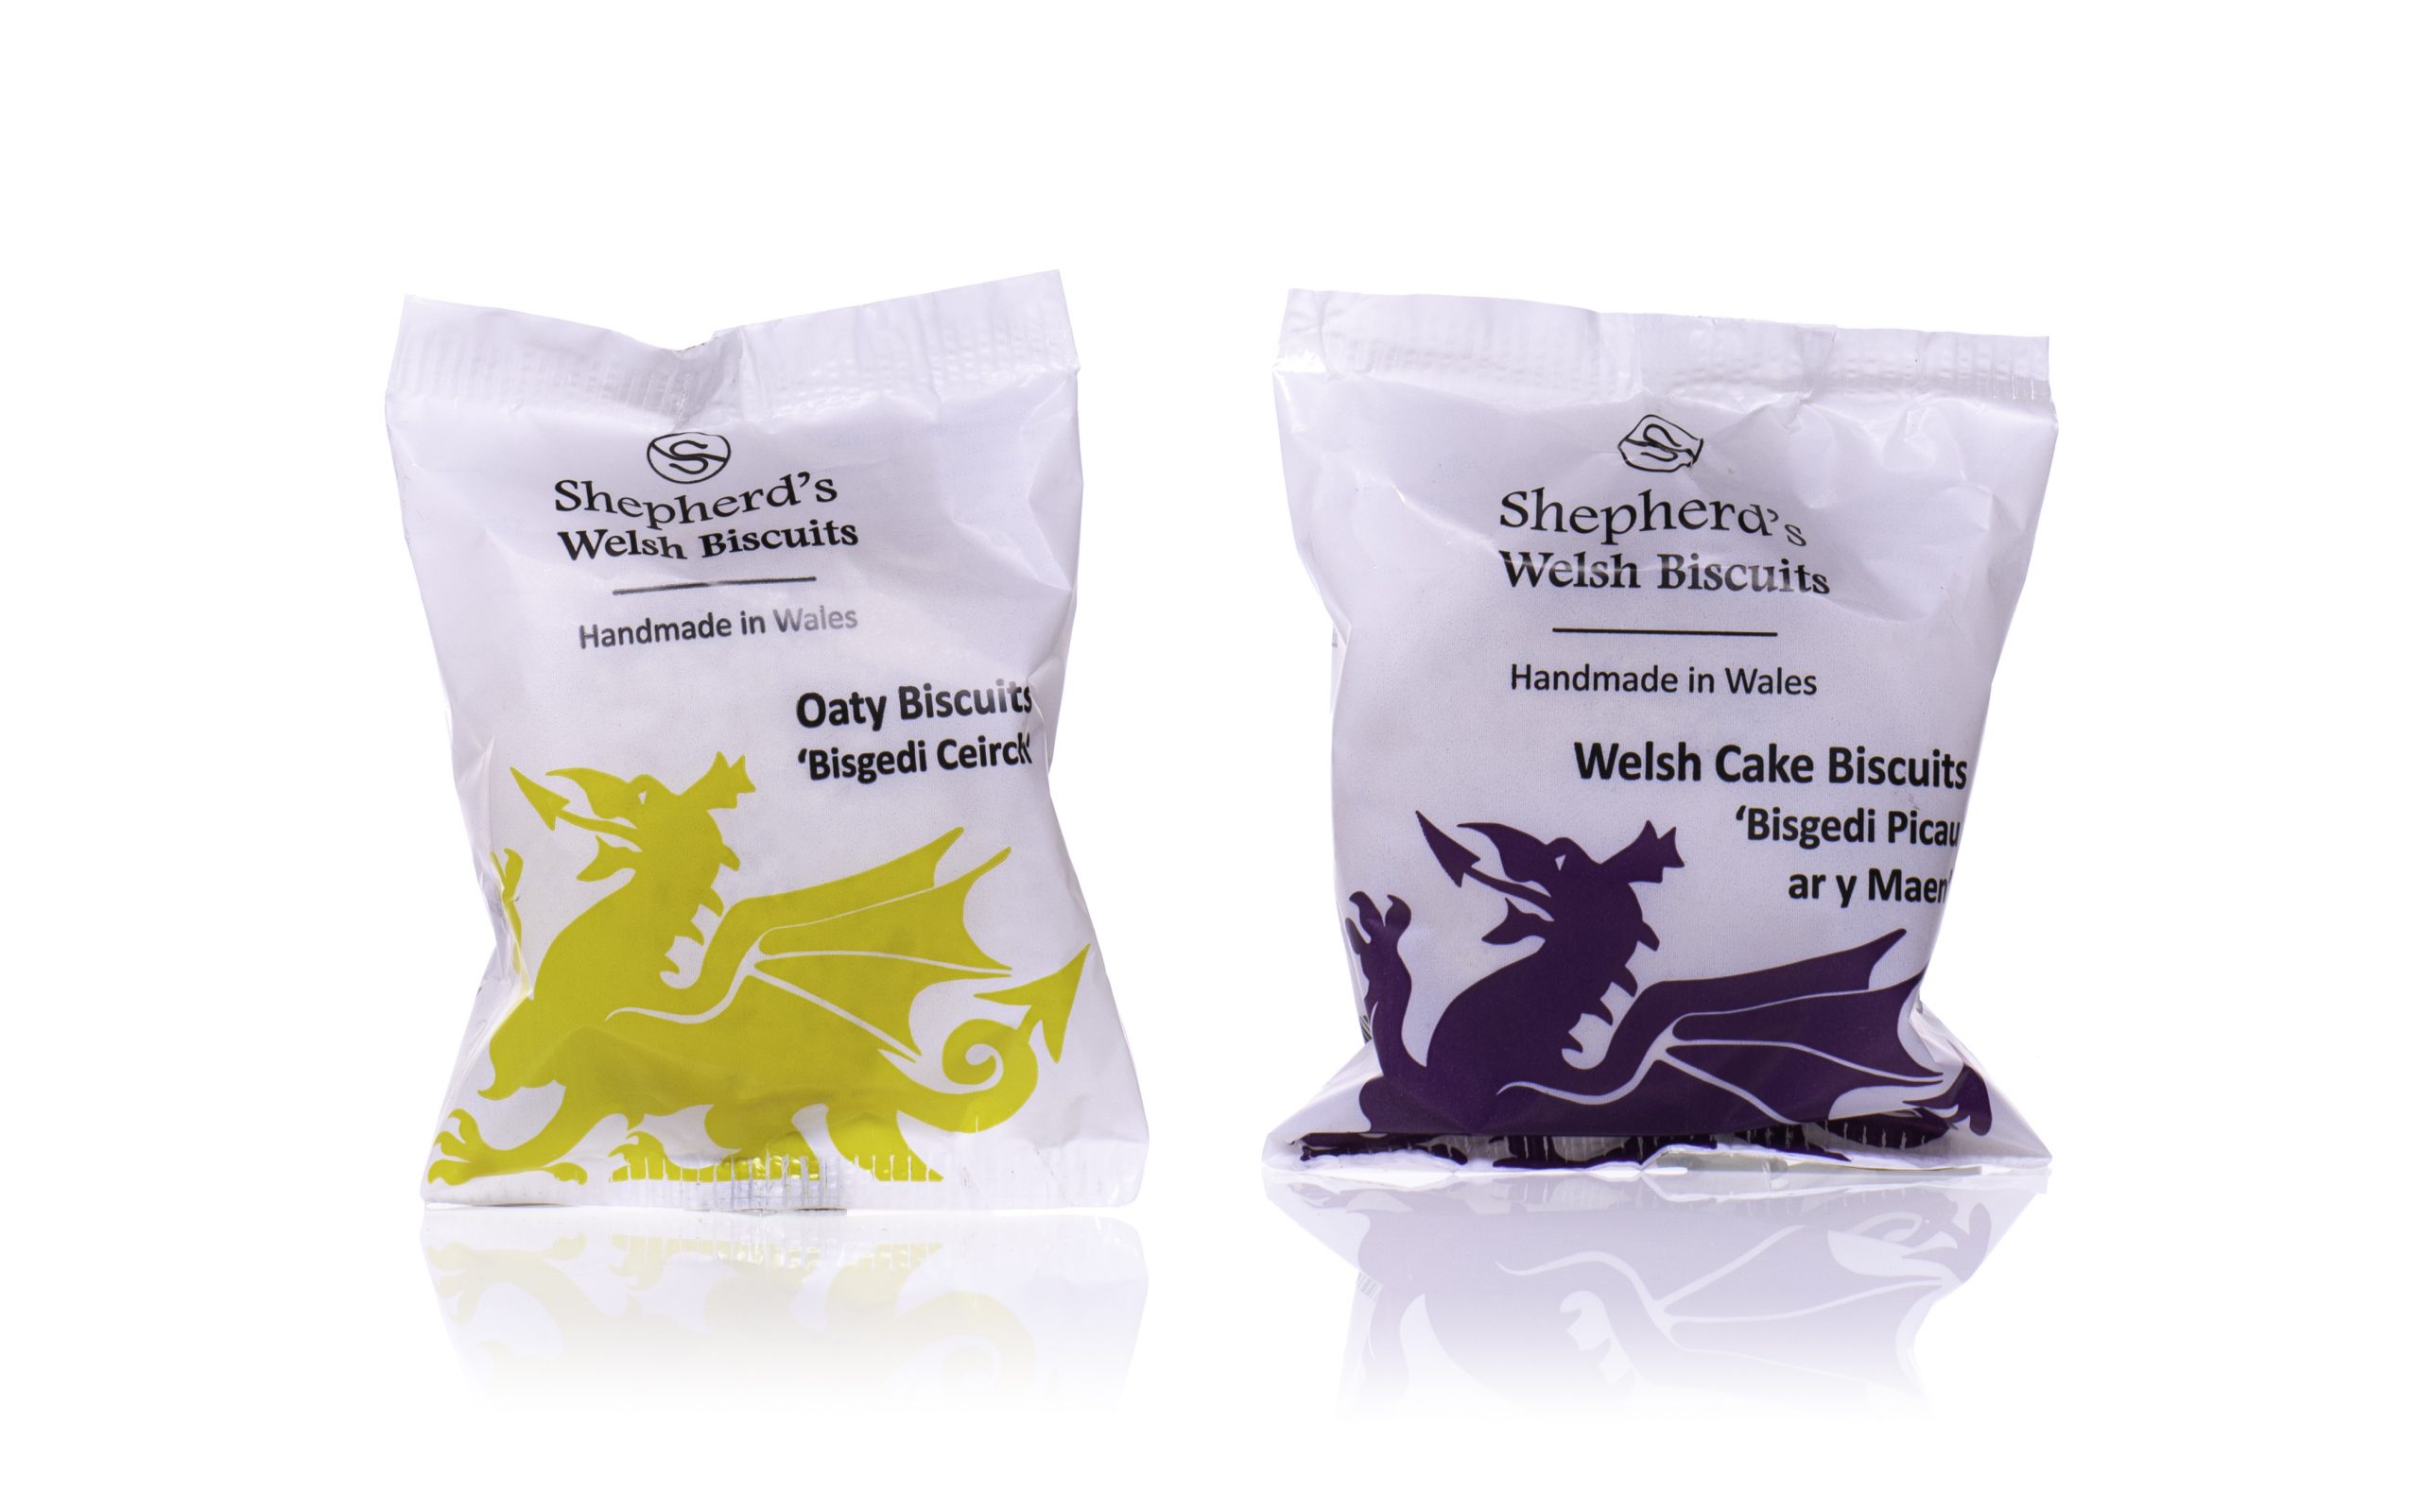 Shepherds Welsh Biscuits - twin-pack range